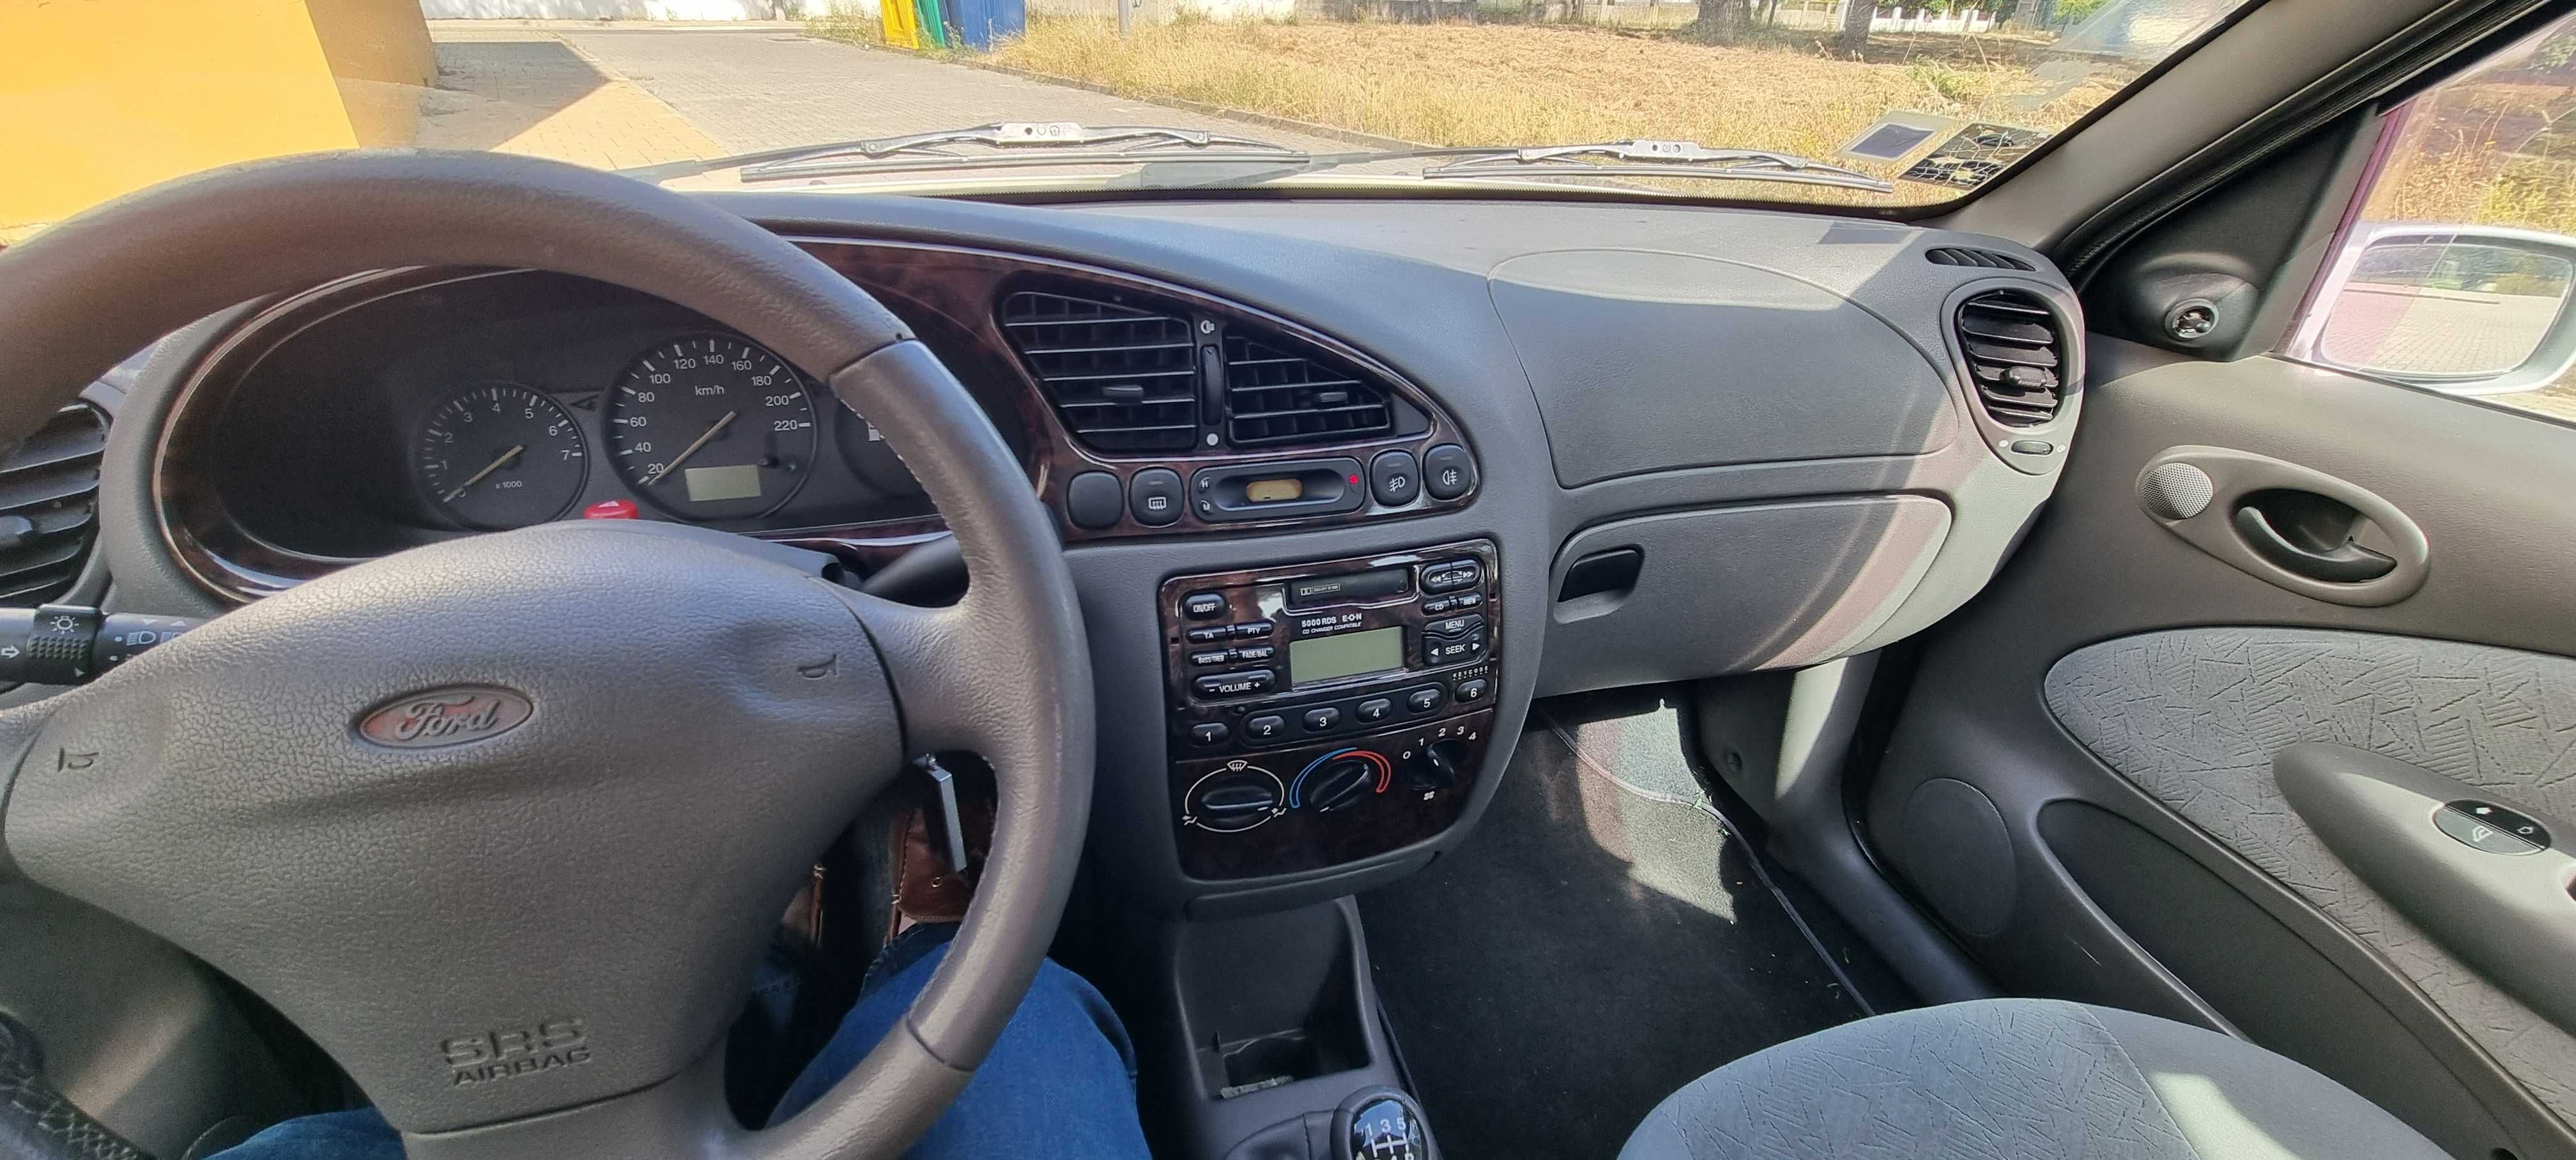 Ford Fiesta 1.4 1999